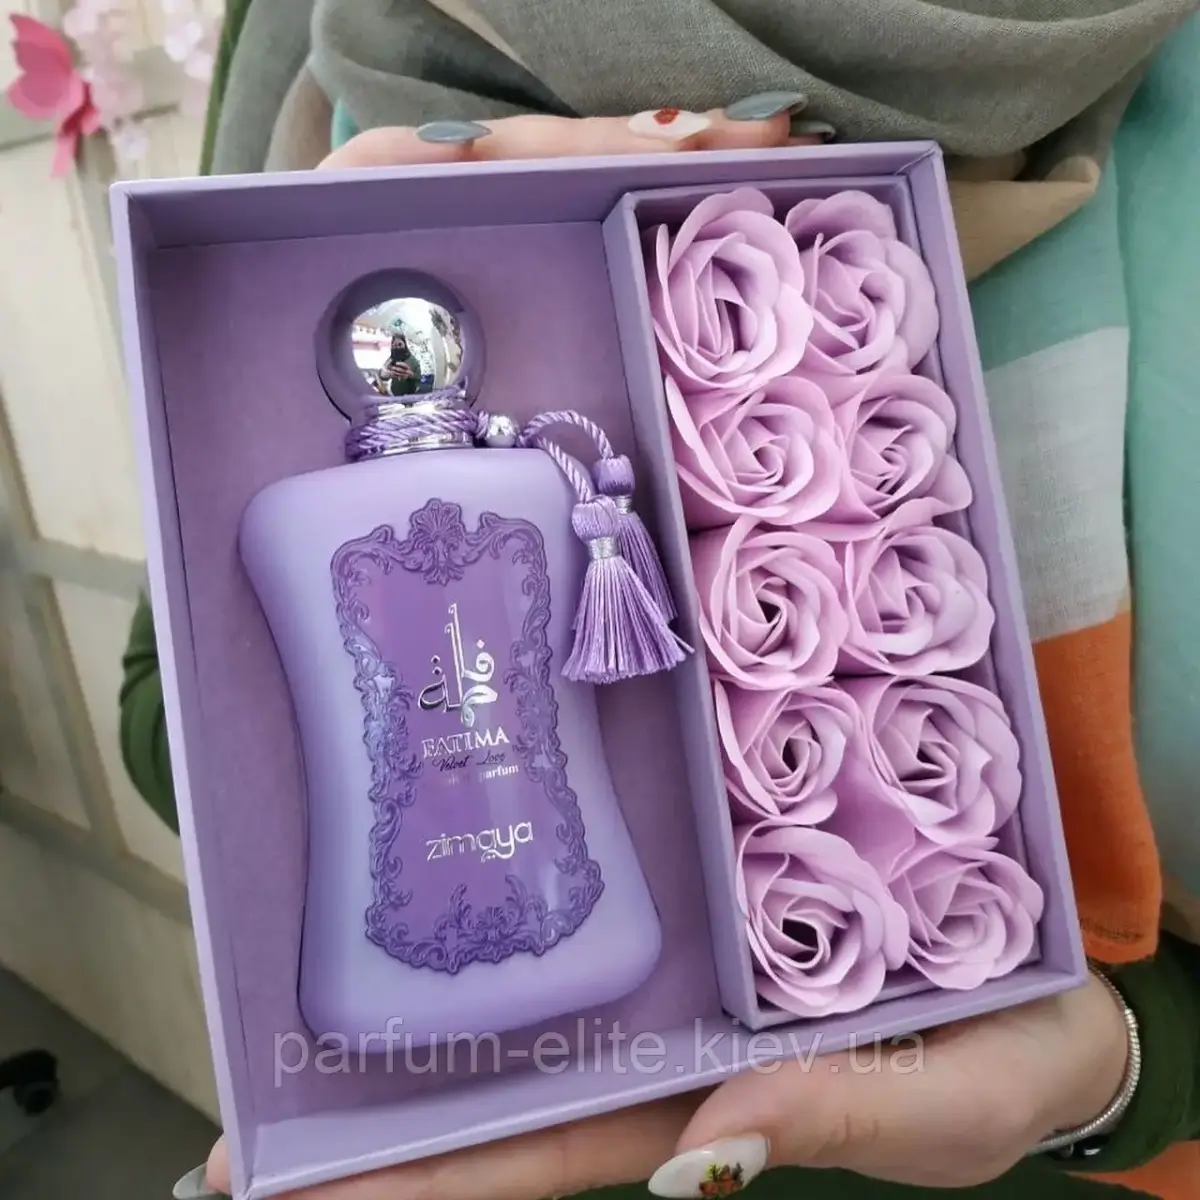 Zimaya Fatima Velvet Love Perfume 100ml EDP By Afnan